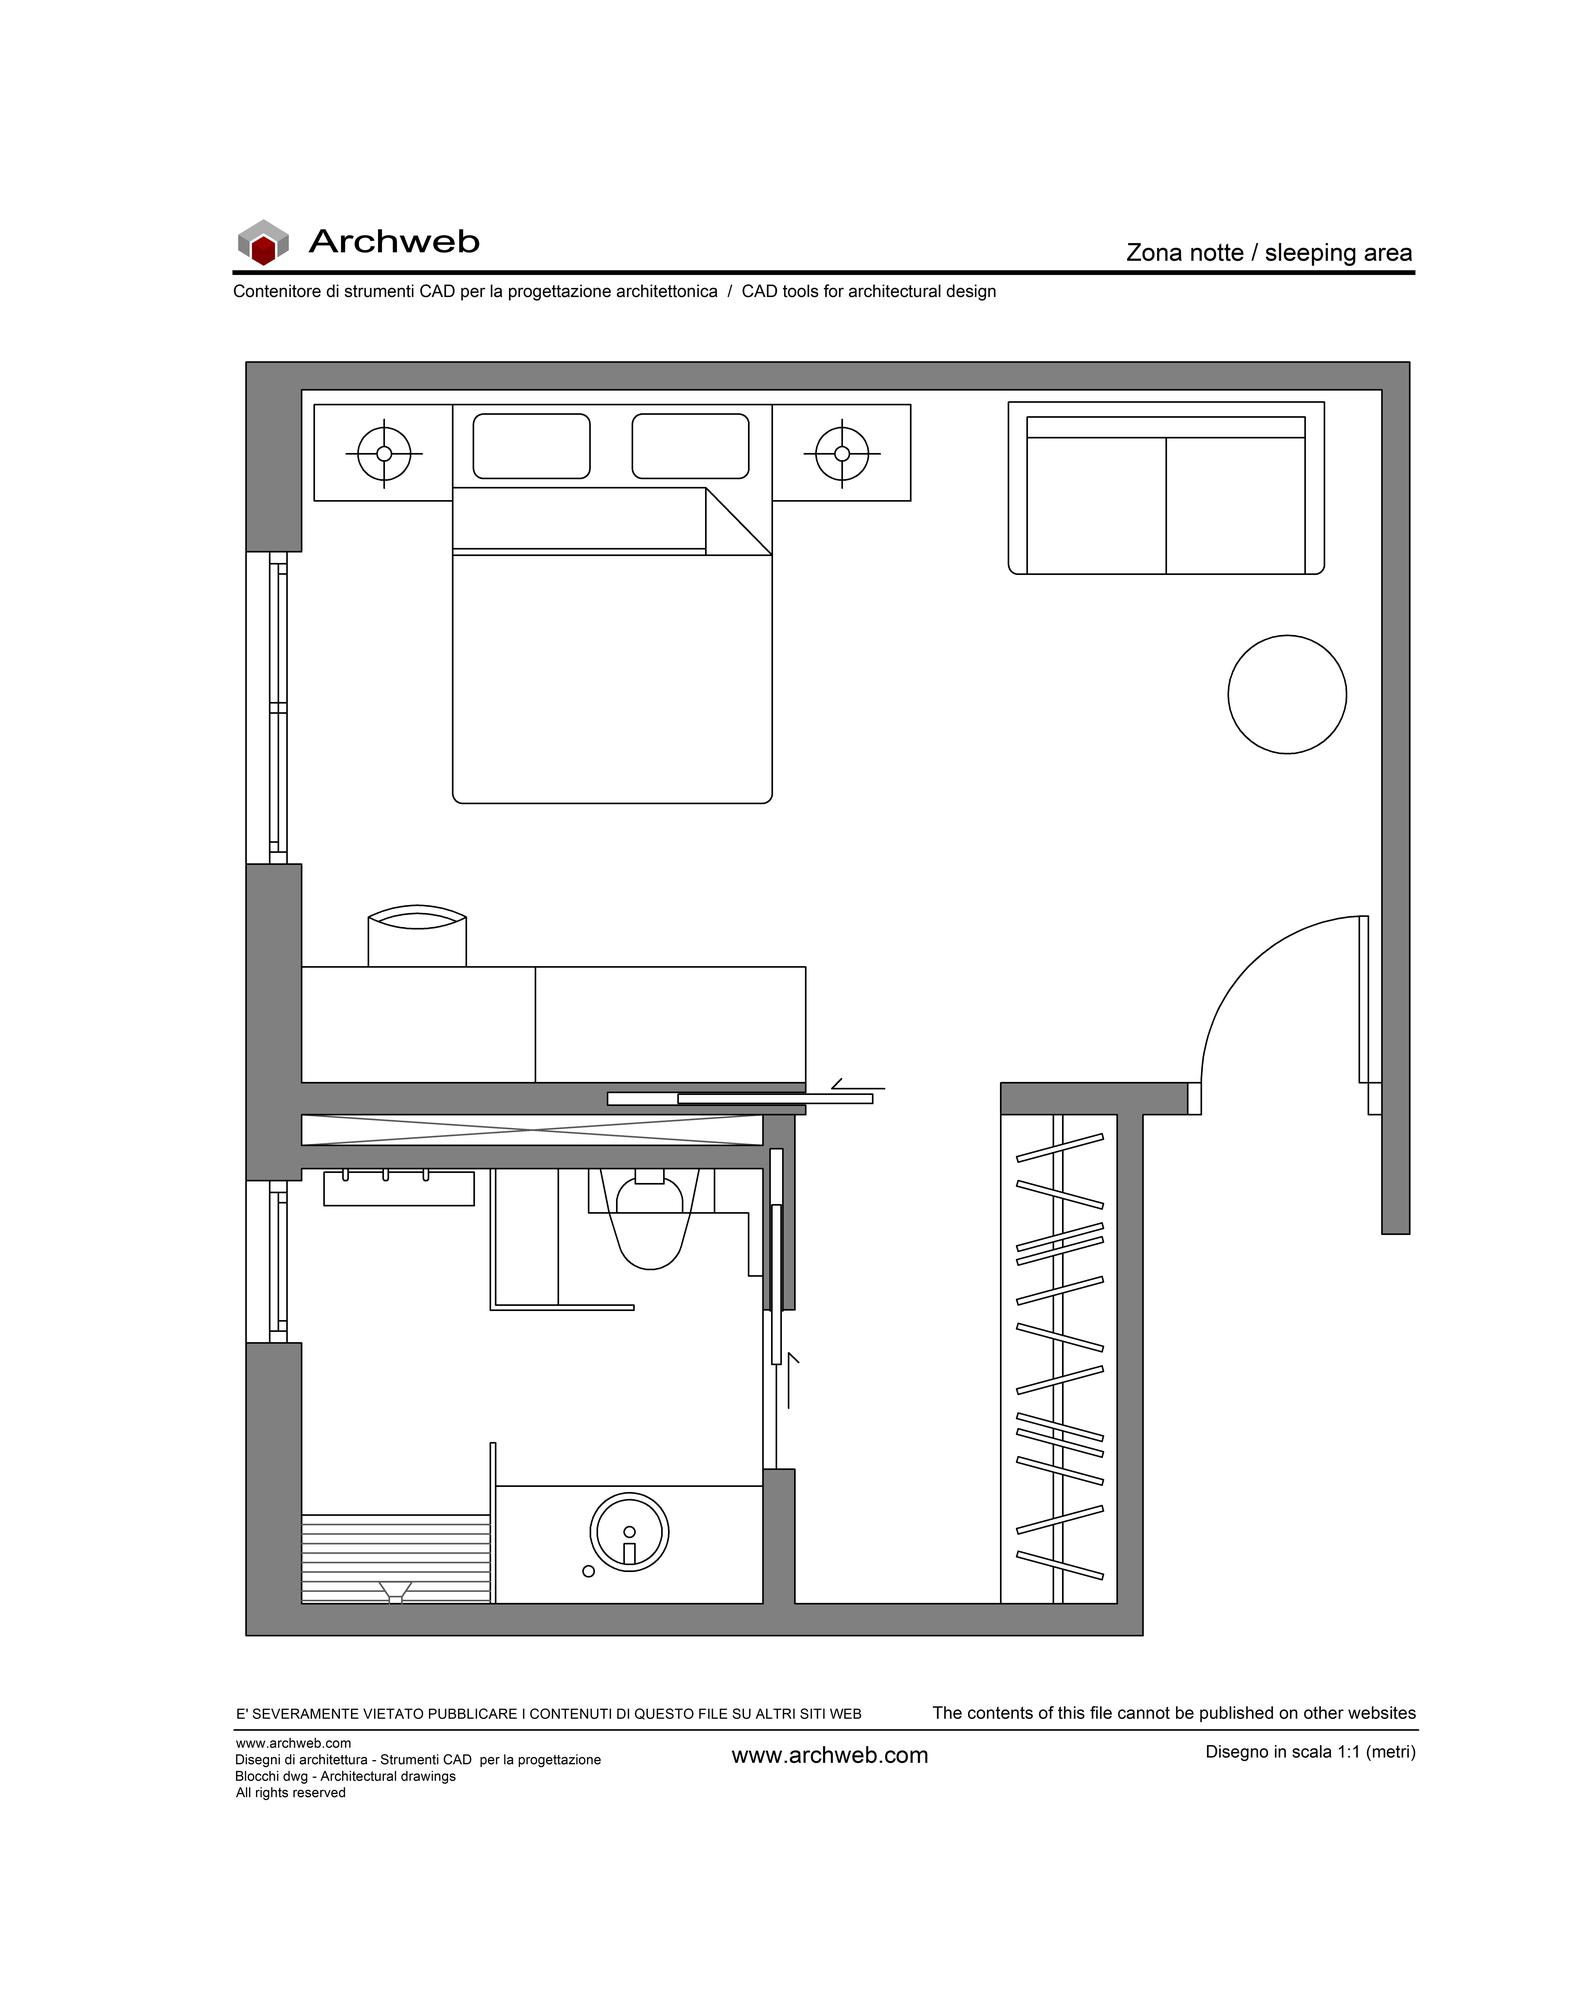 Sleeping area dwg 24 - Bedroom plan 1:100 scale - Archweb